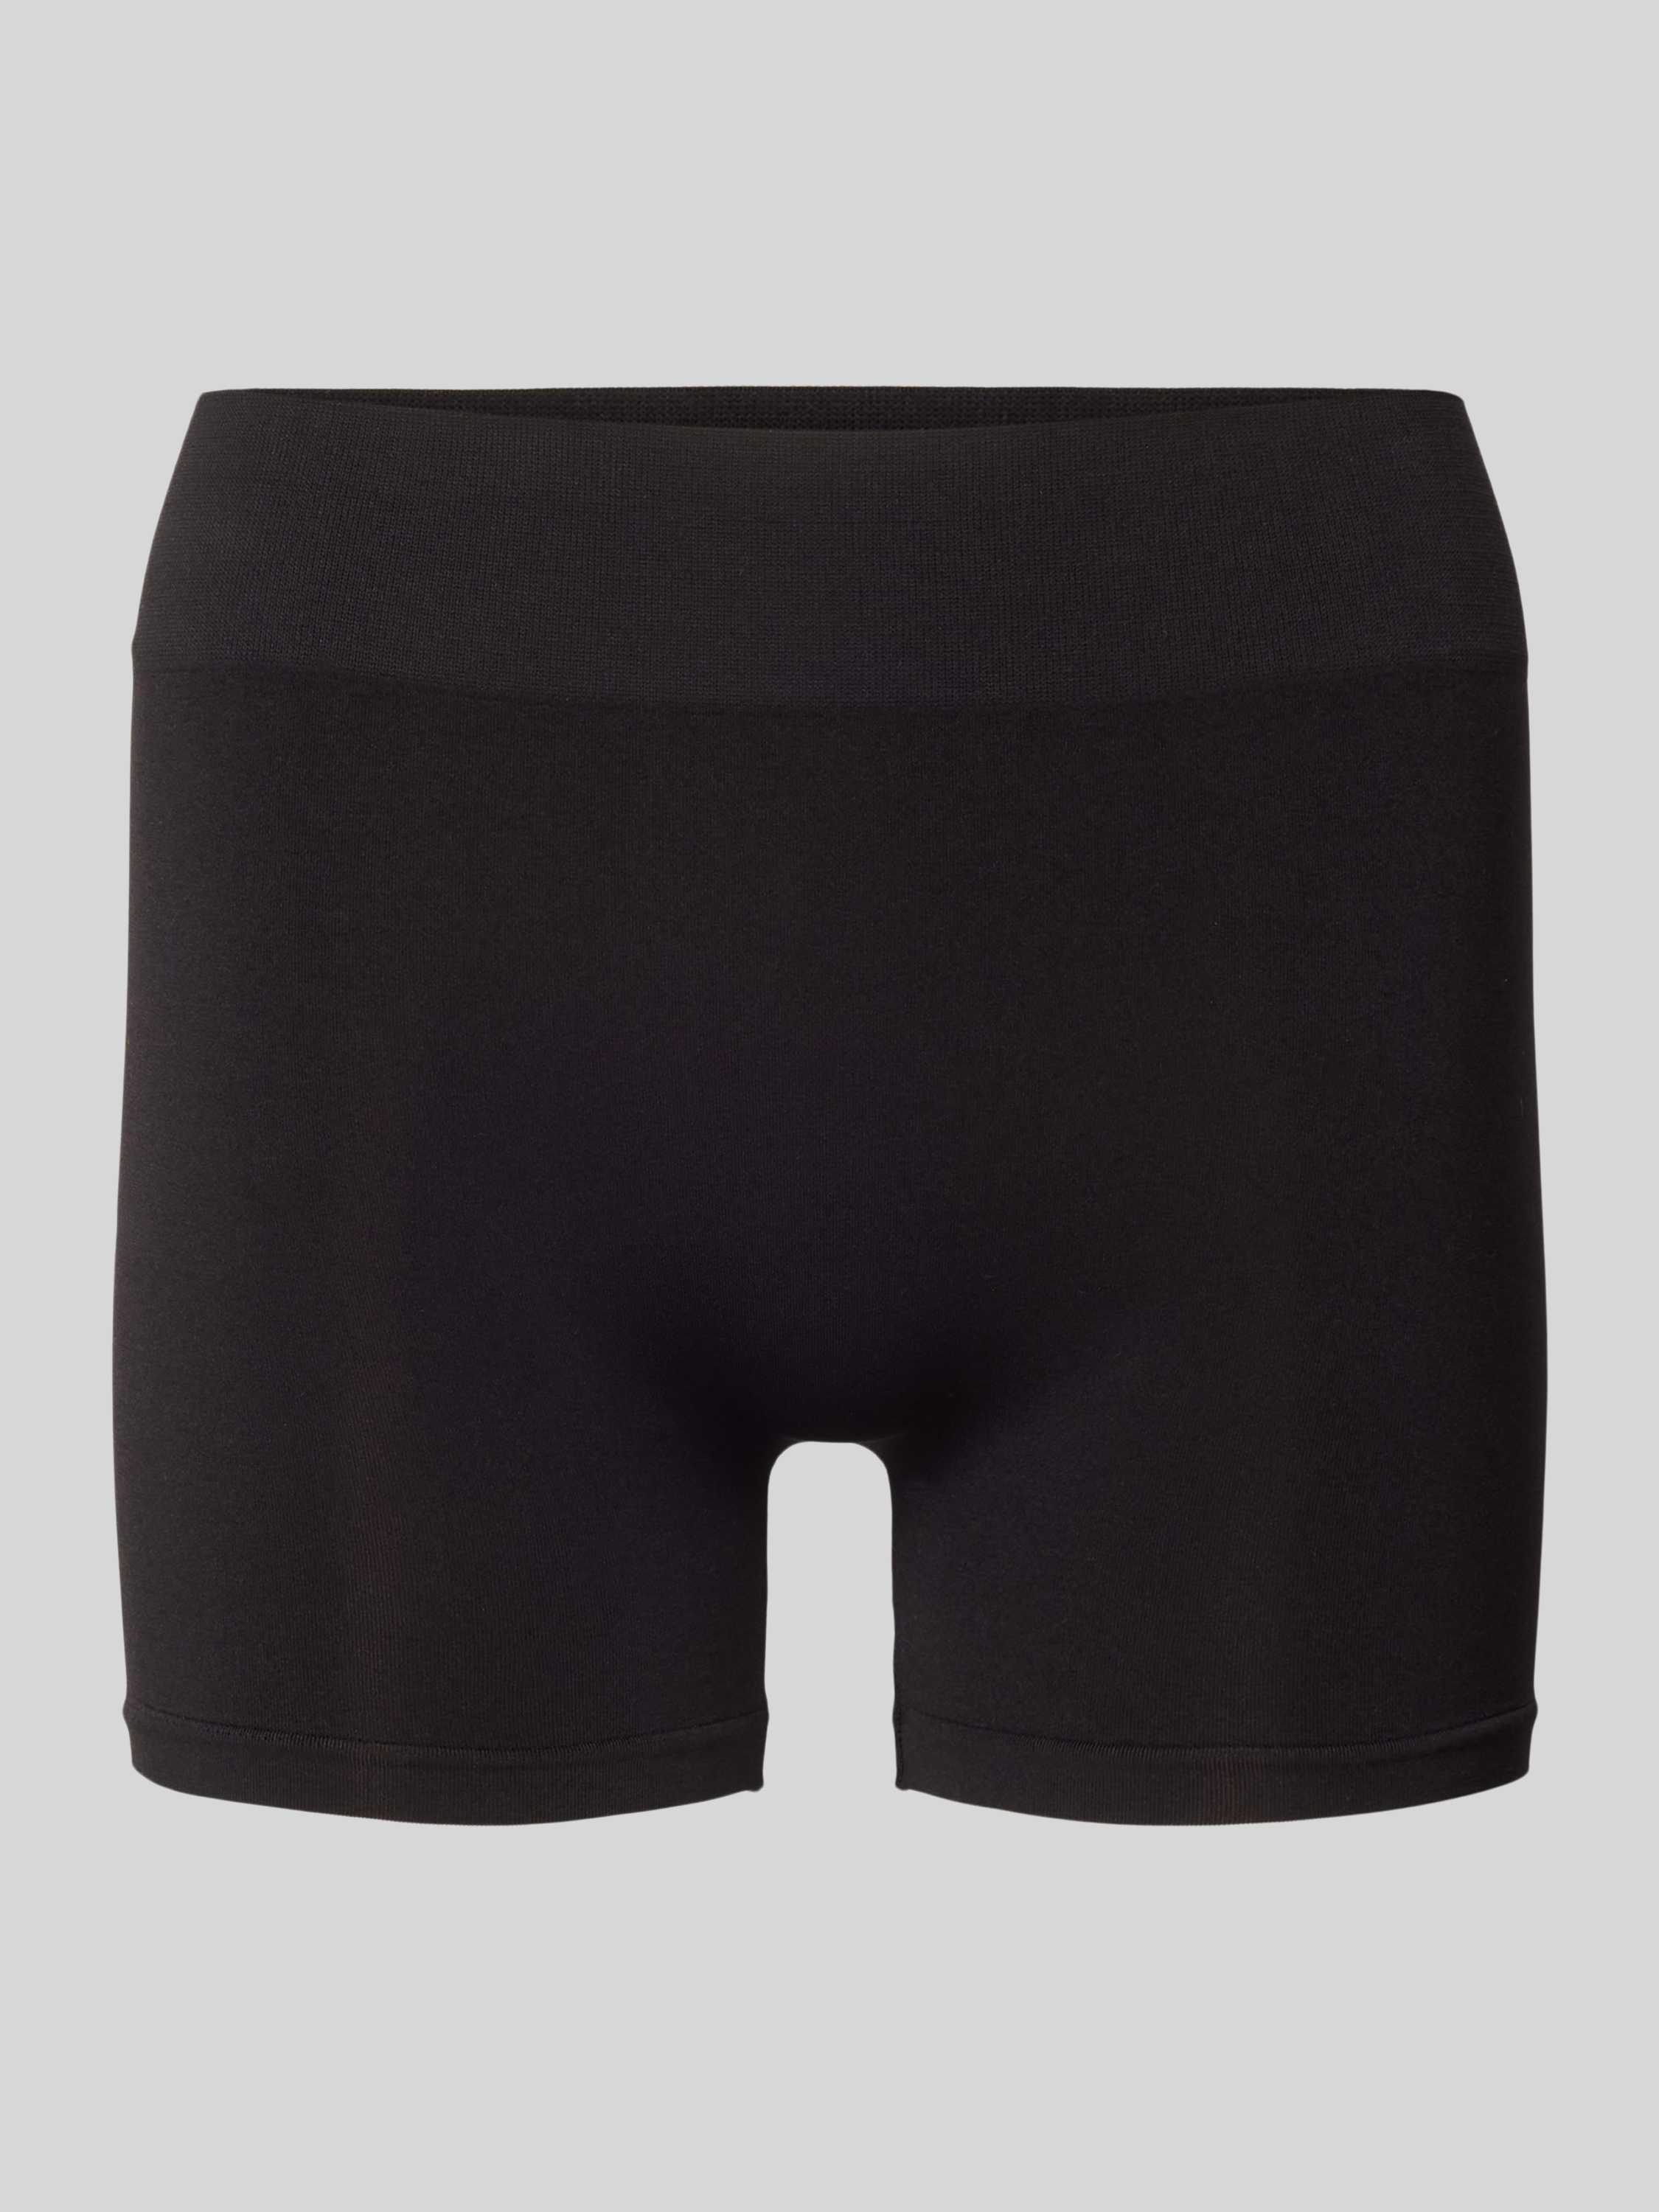 Shorts im unifarbenen Design Modell 'VICKY', Peek & Cloppenburg